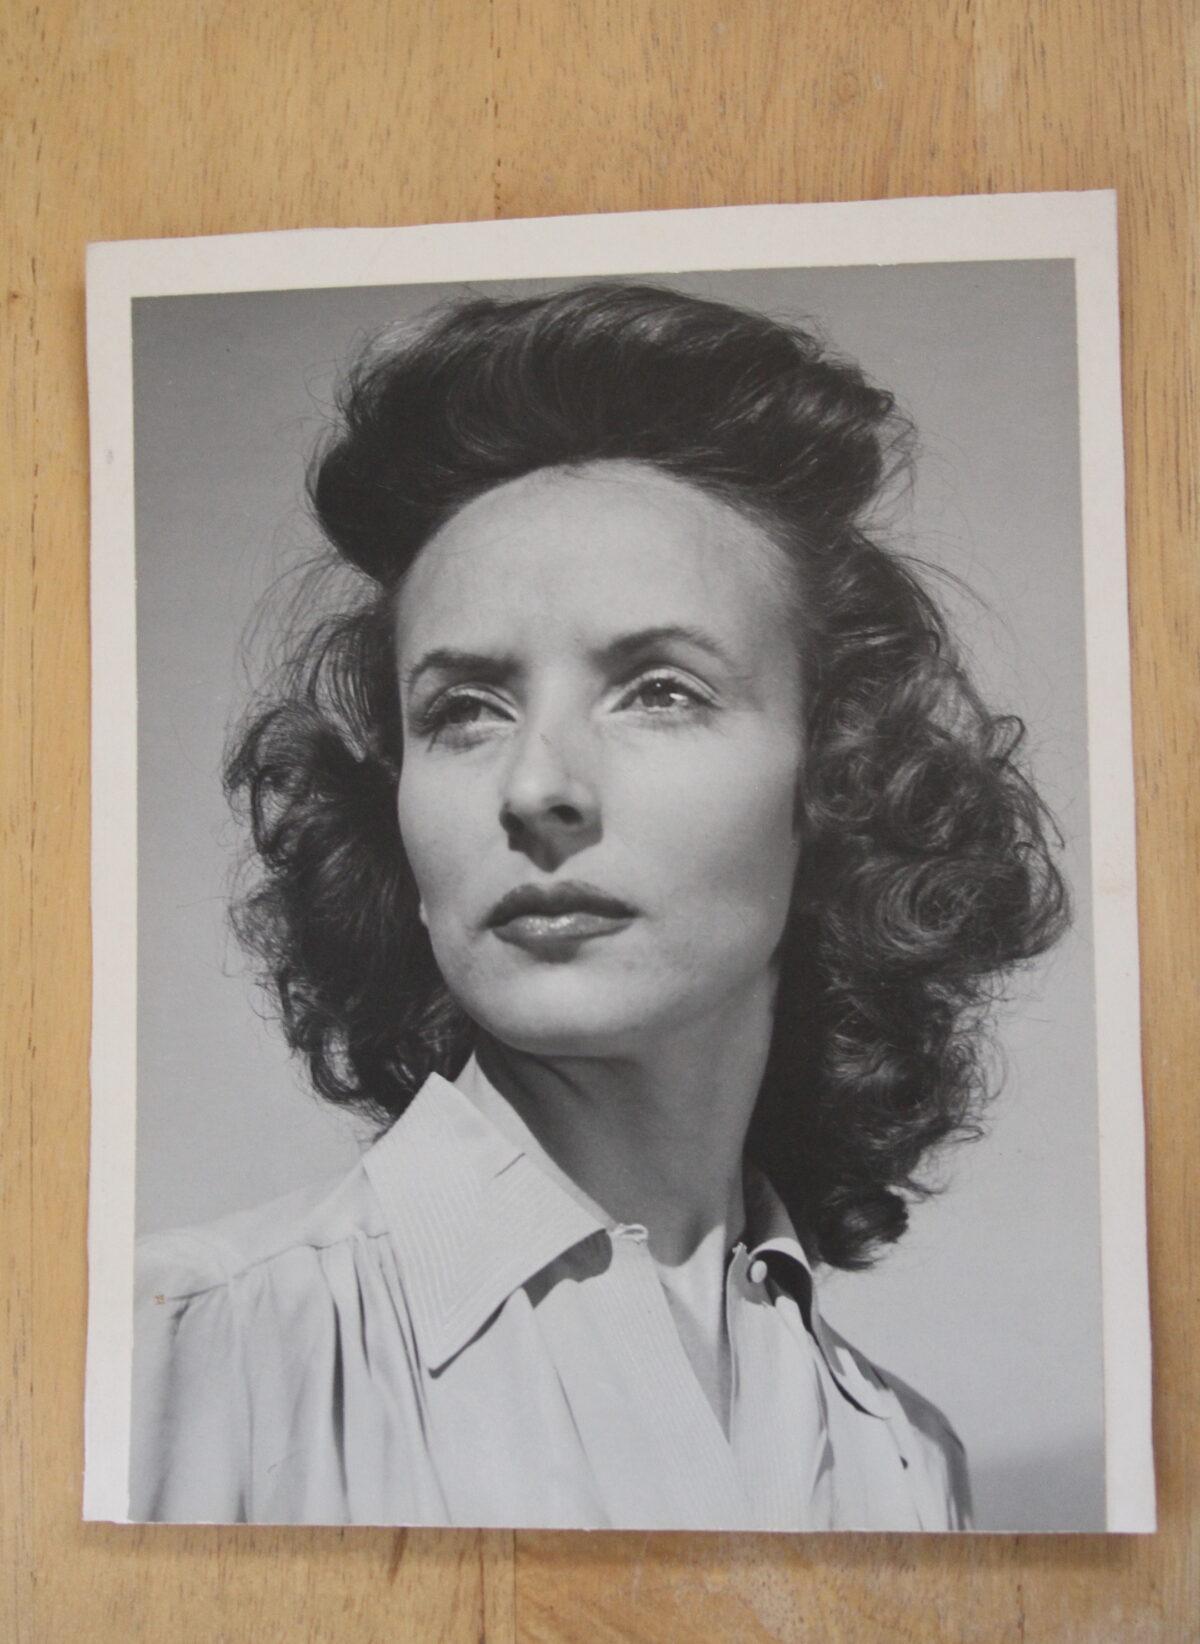 A photo of Liz Reeder, WWII veteran Ed Reeder's wife. (Brad Jones/The Epoch Times)